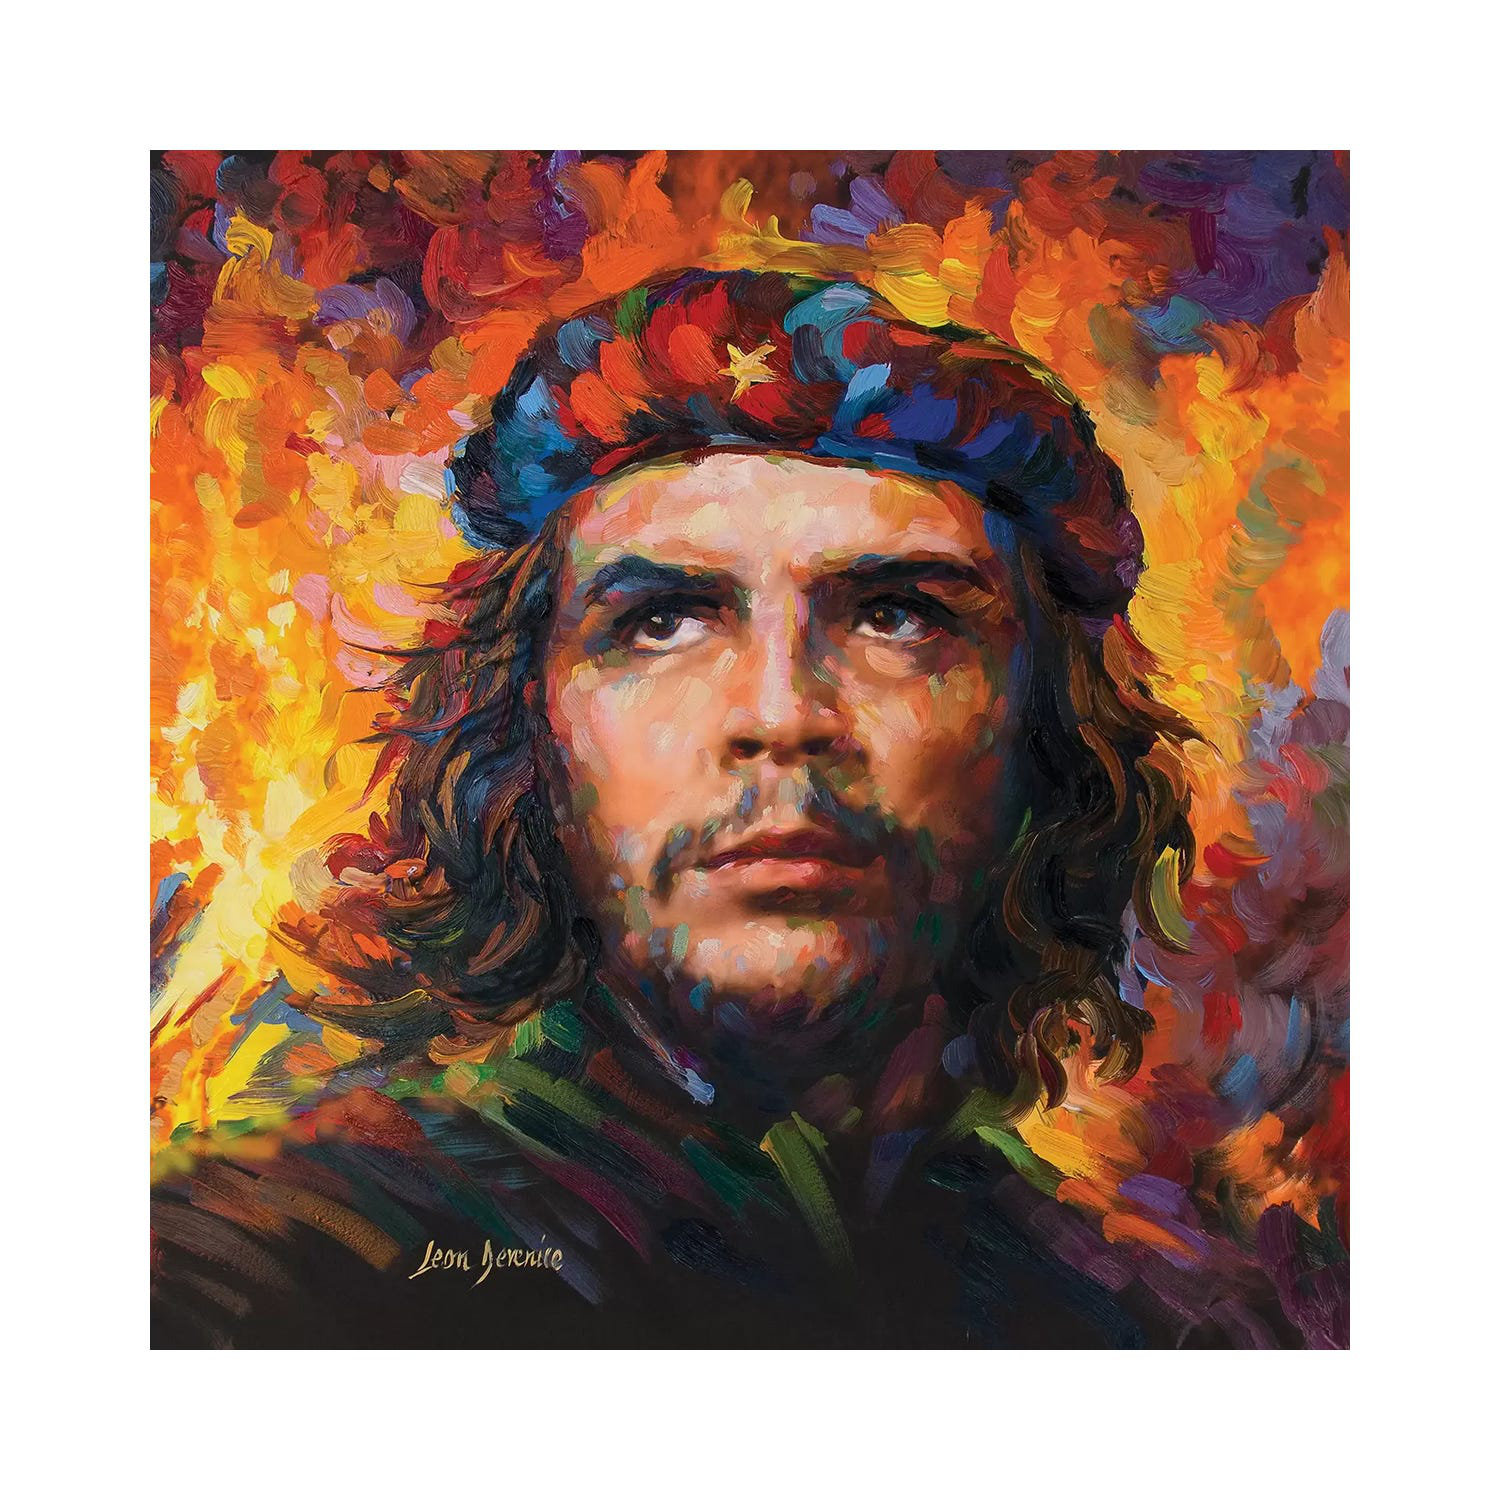 Che Guevara painted jacket  Rocka's Flight Jacket Painting